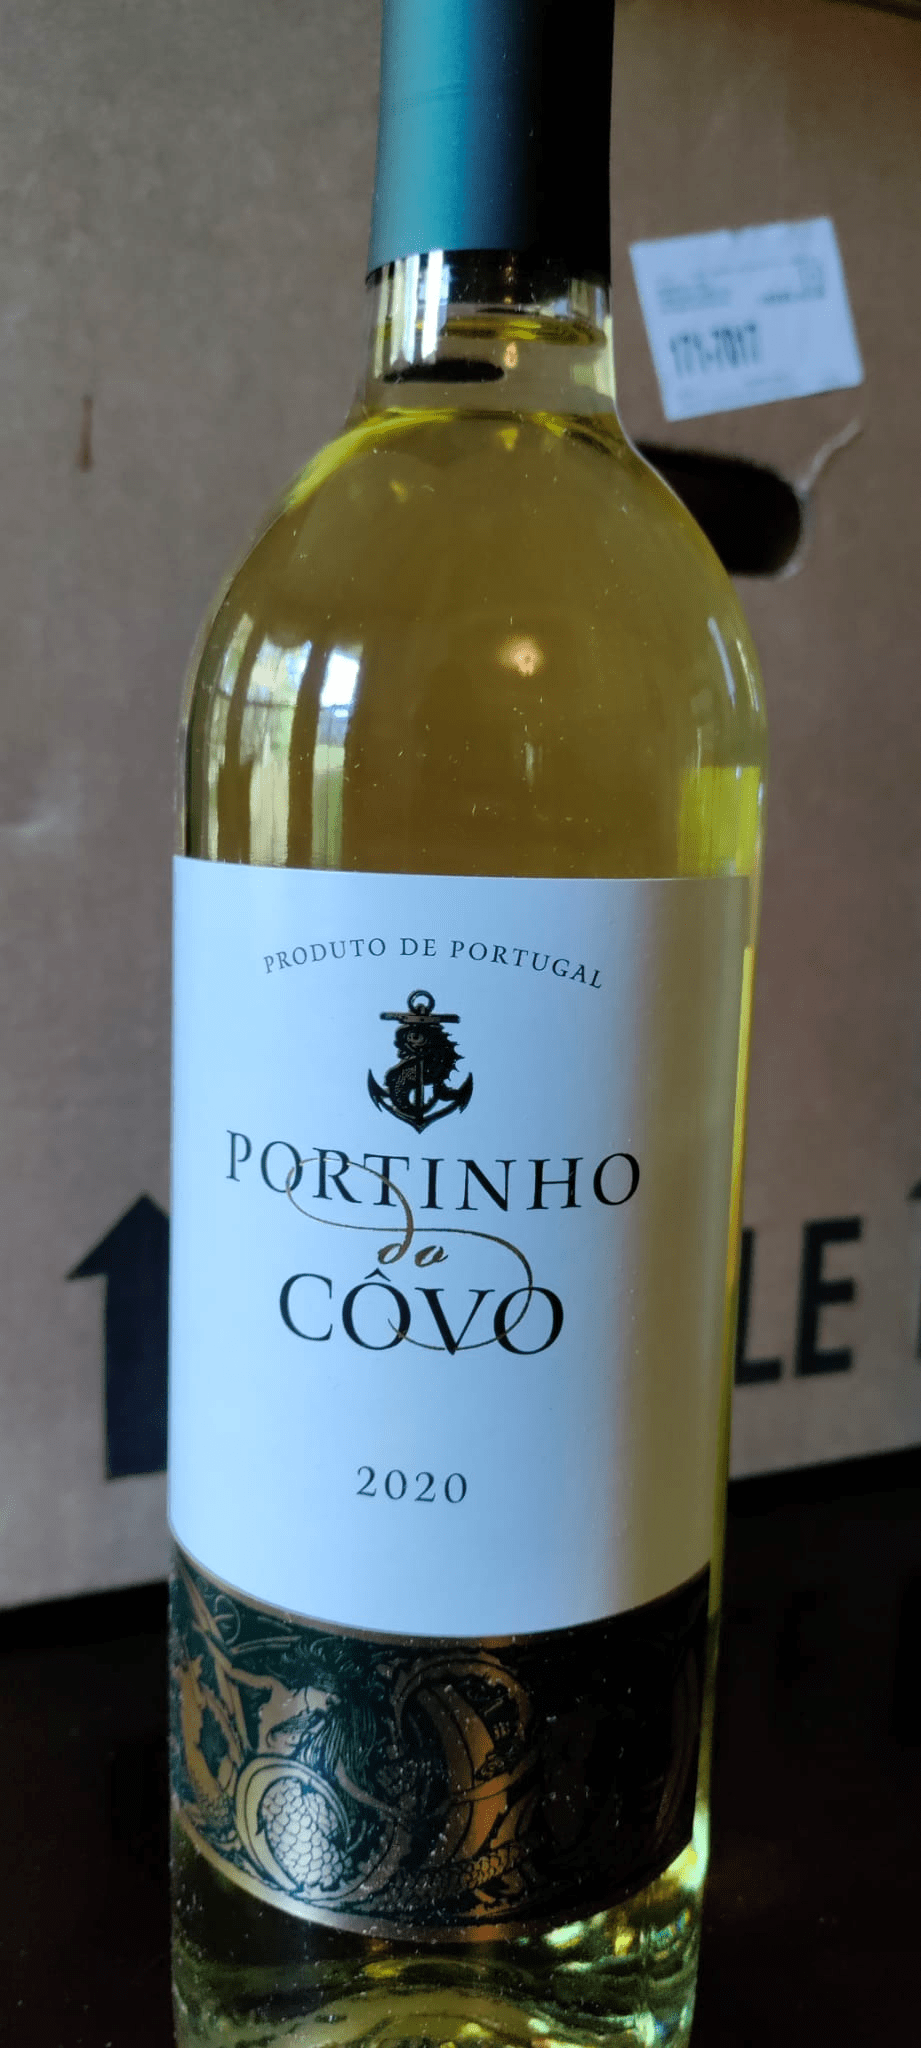 Bottle of Portinho do Covo, Branco.